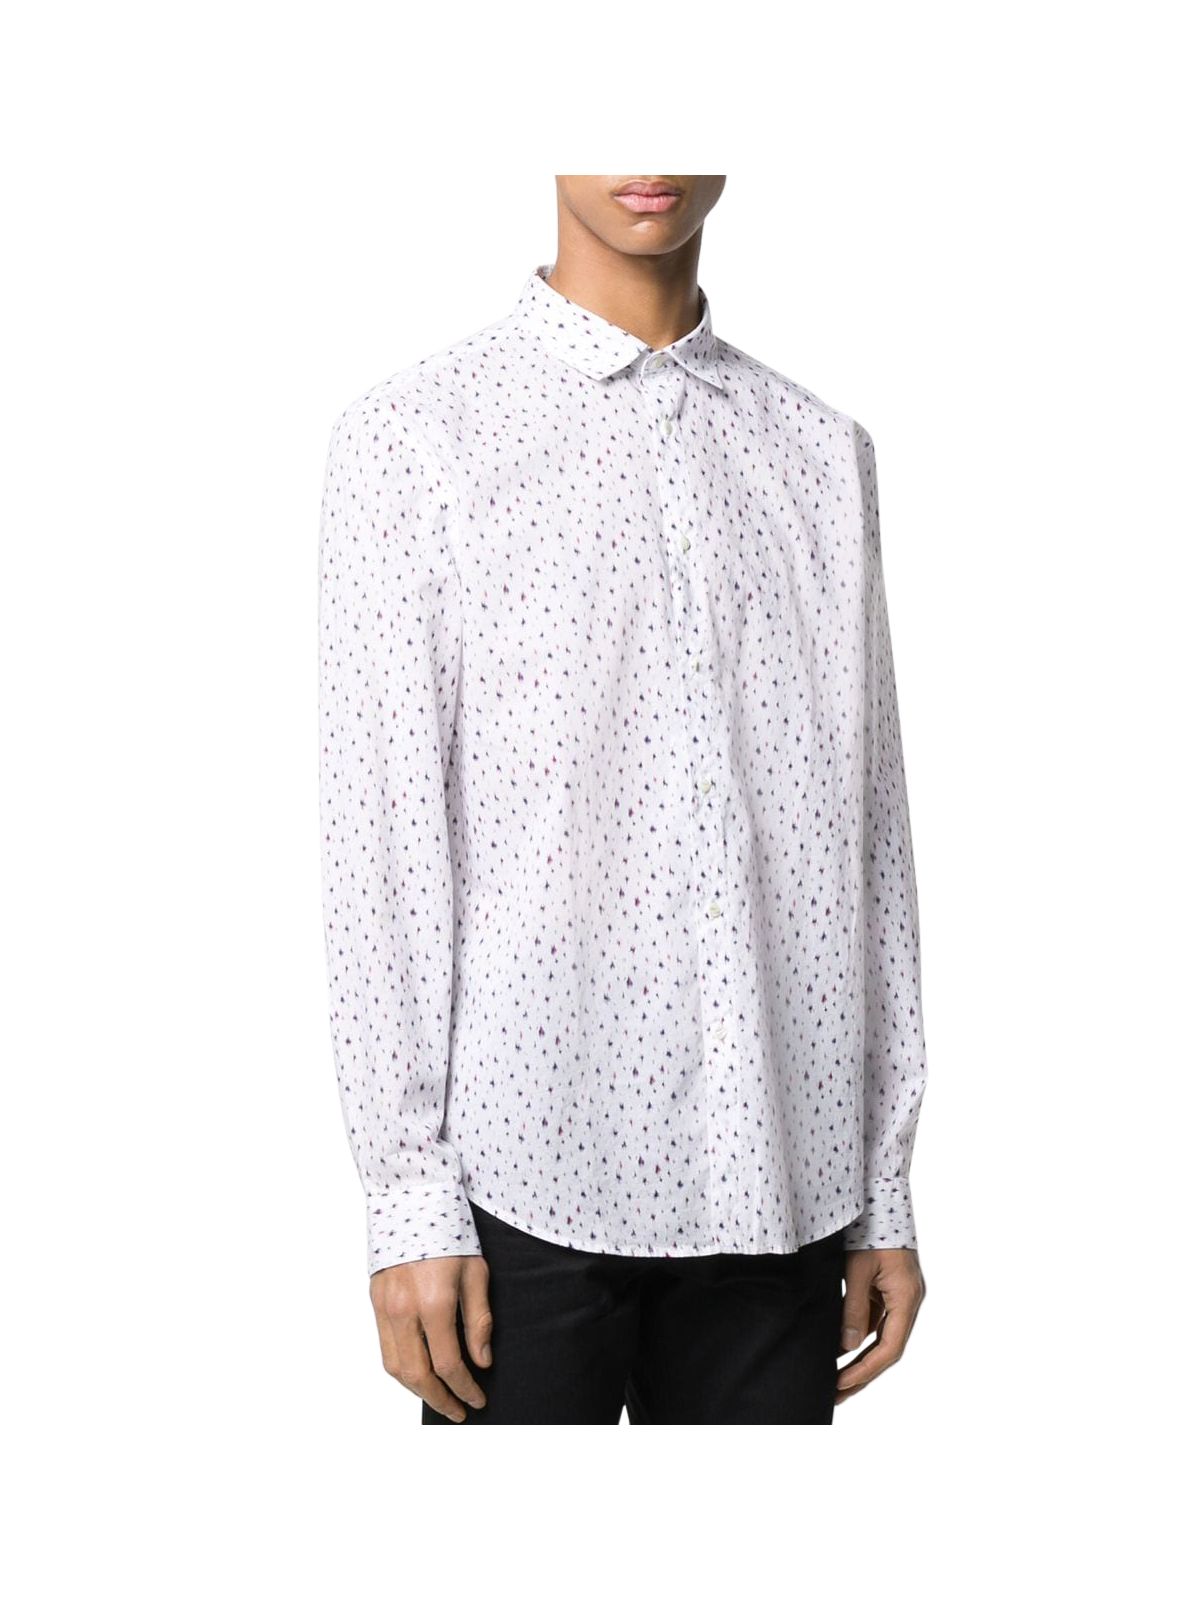 JOHN VARVATOS Mens White Printed Collared Classic Fit Shirt L